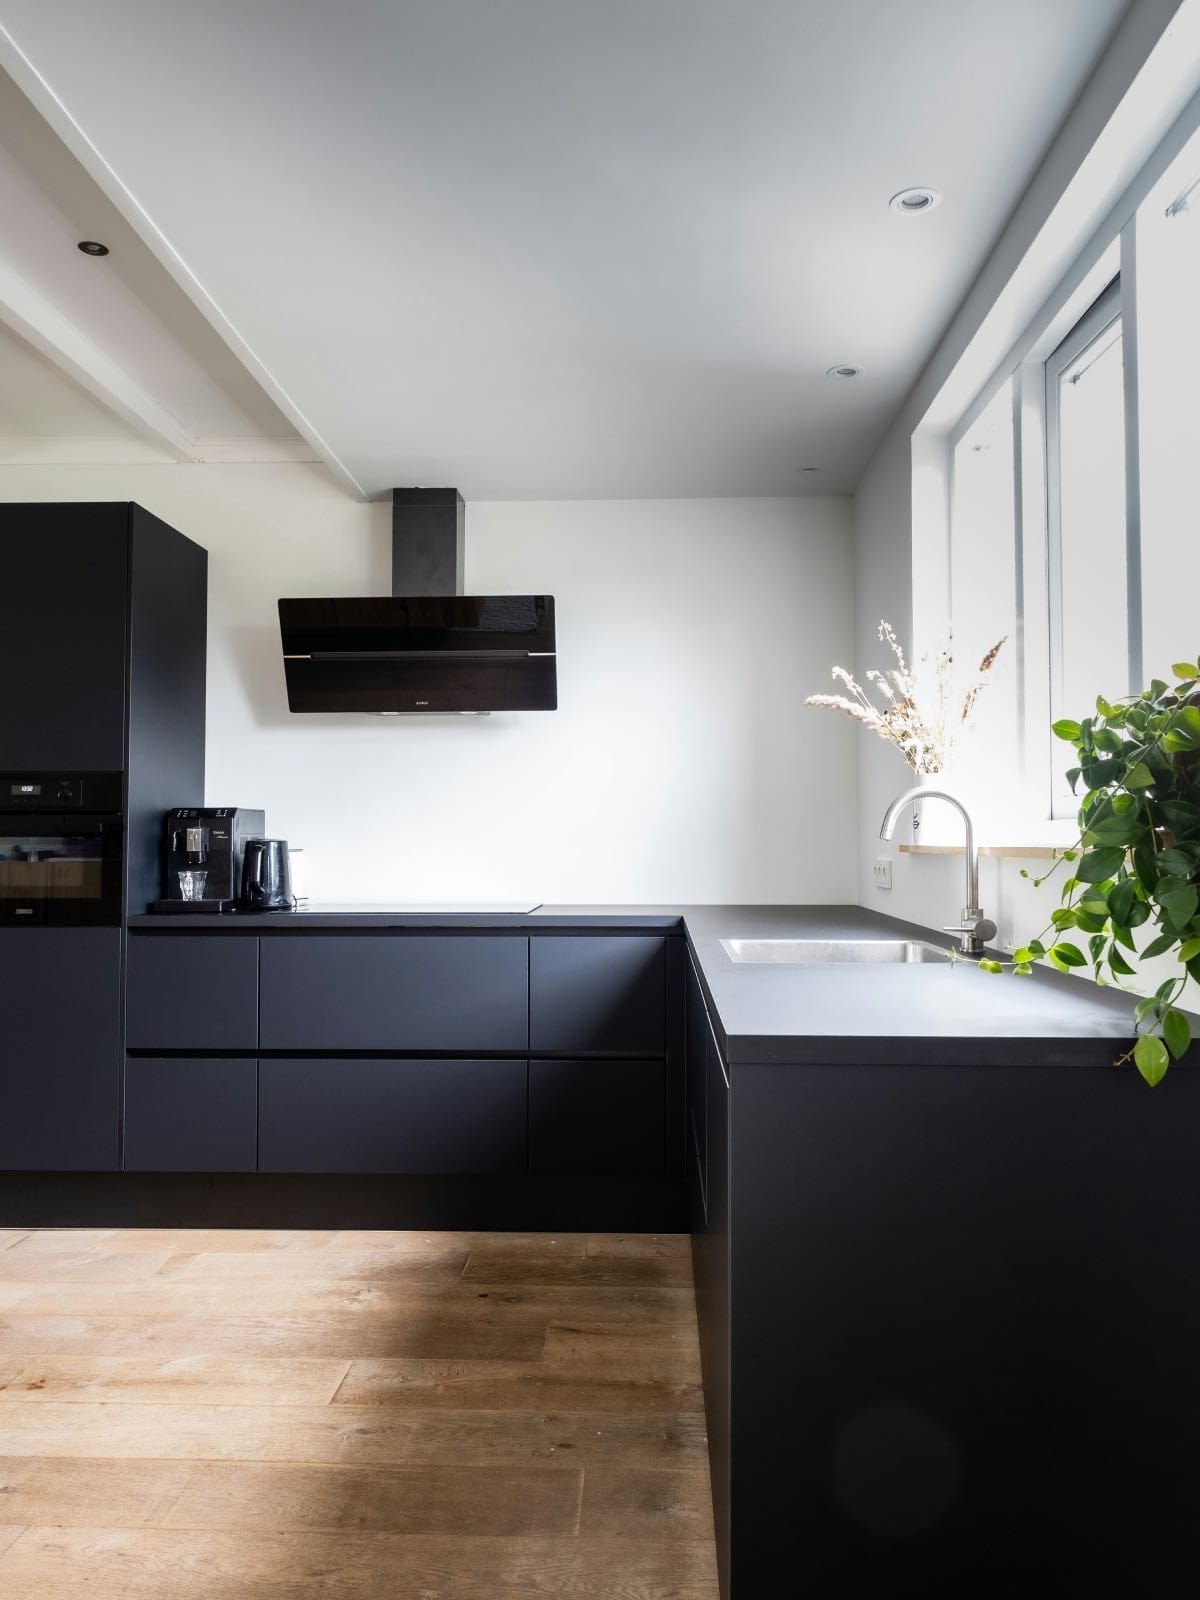 modern black kitchen with new appliances